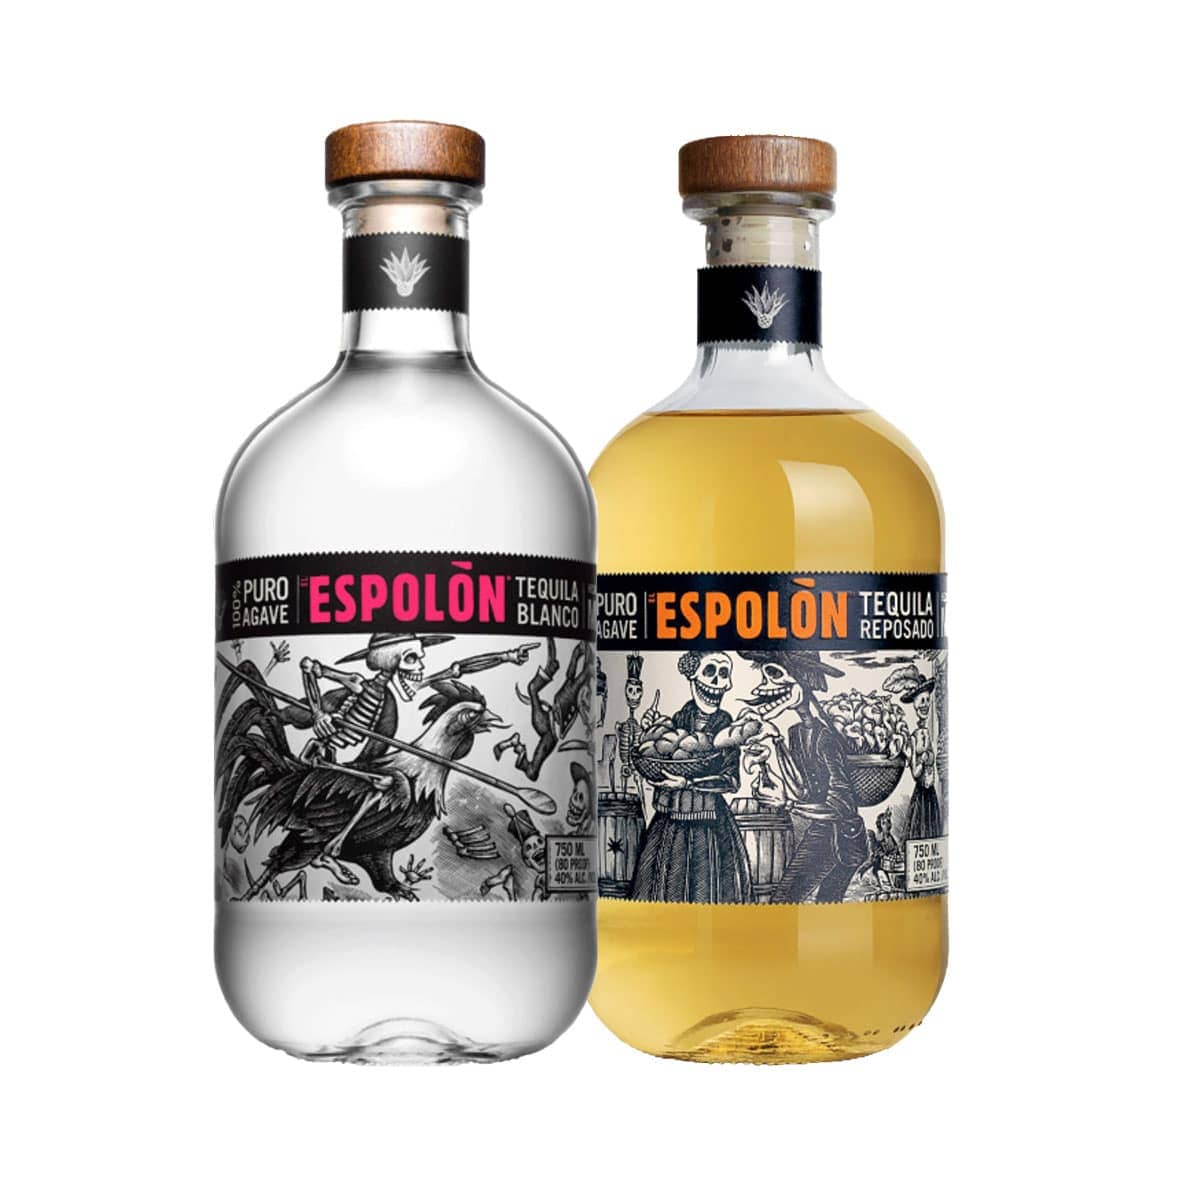 Giancarlo Constantine Moreira-Salles: The Owner of Espolon Tequila